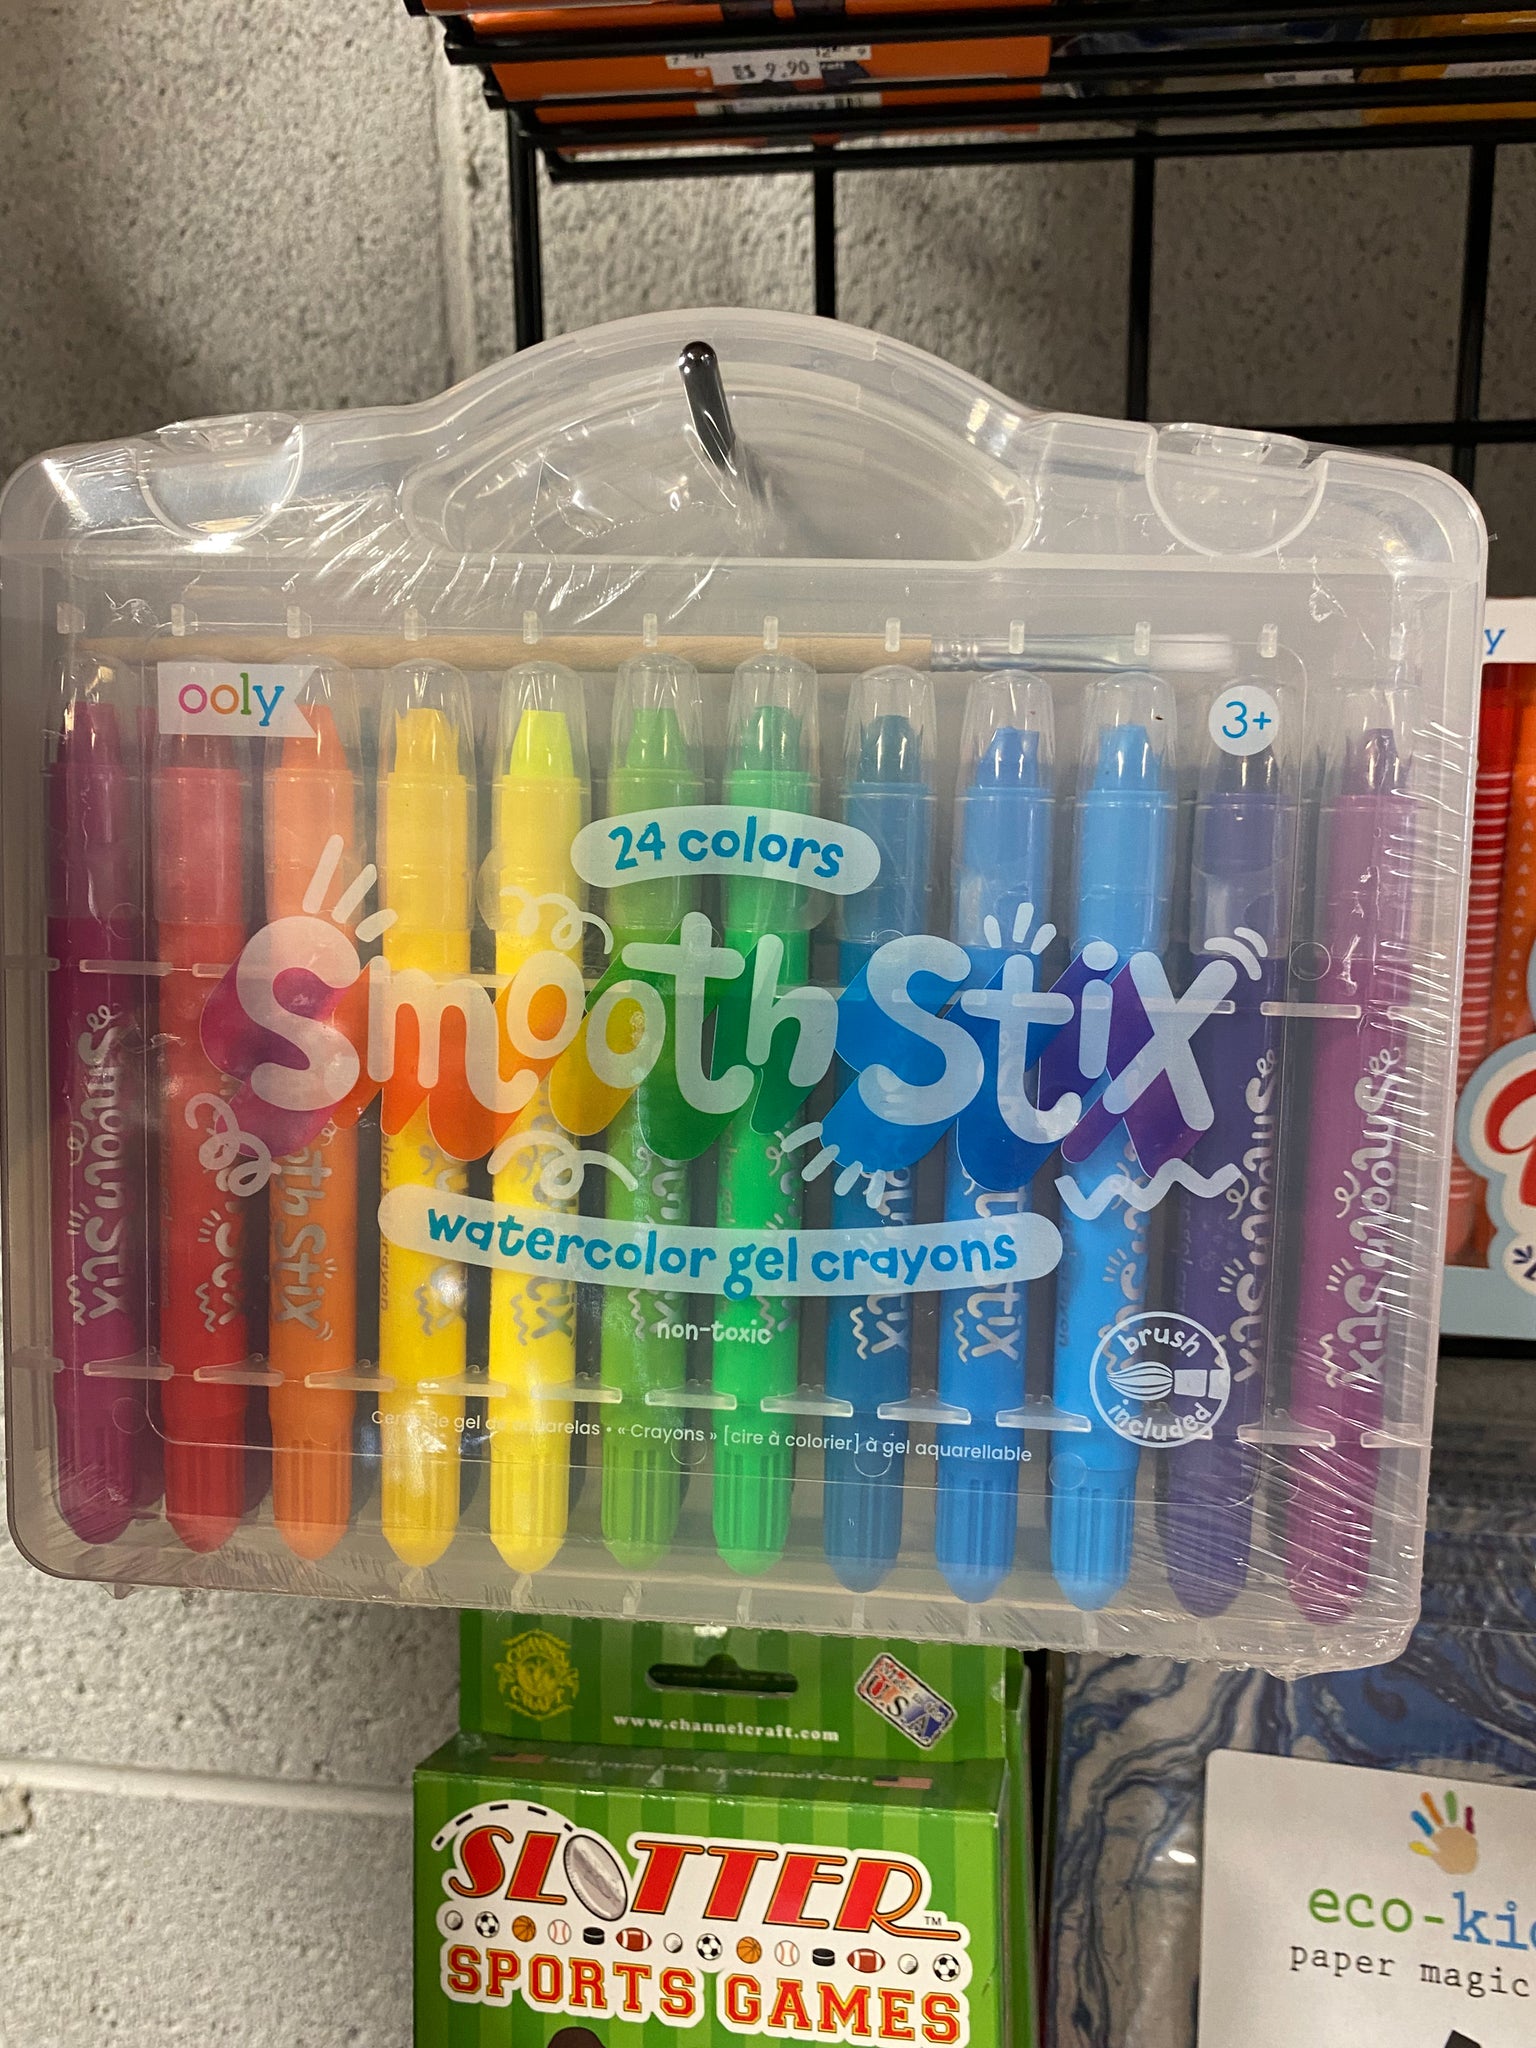 OOLY Smooth Stix Watercolor Gel Crayons